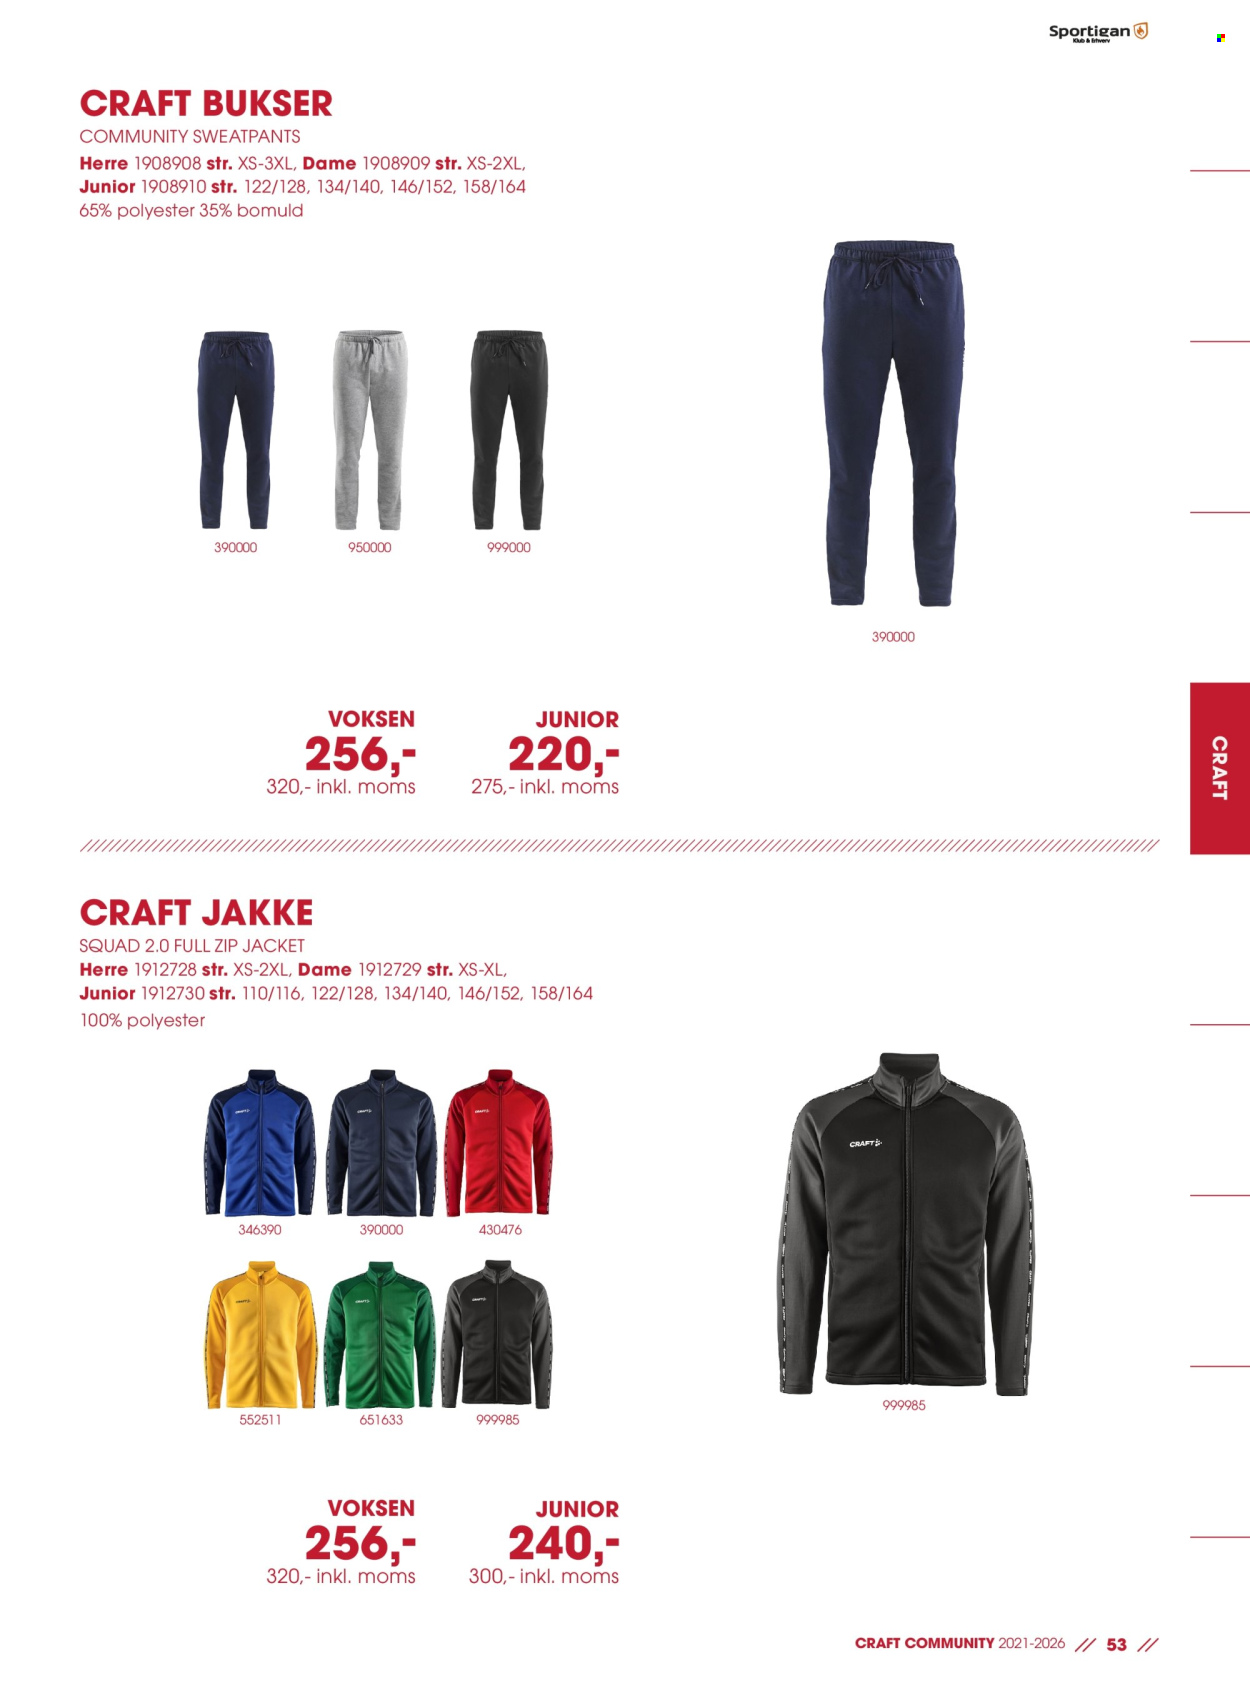 thumbnail - Sportigan tilbud  - tilbudsprodukter - Craft, jakke, bukser. Side 53.